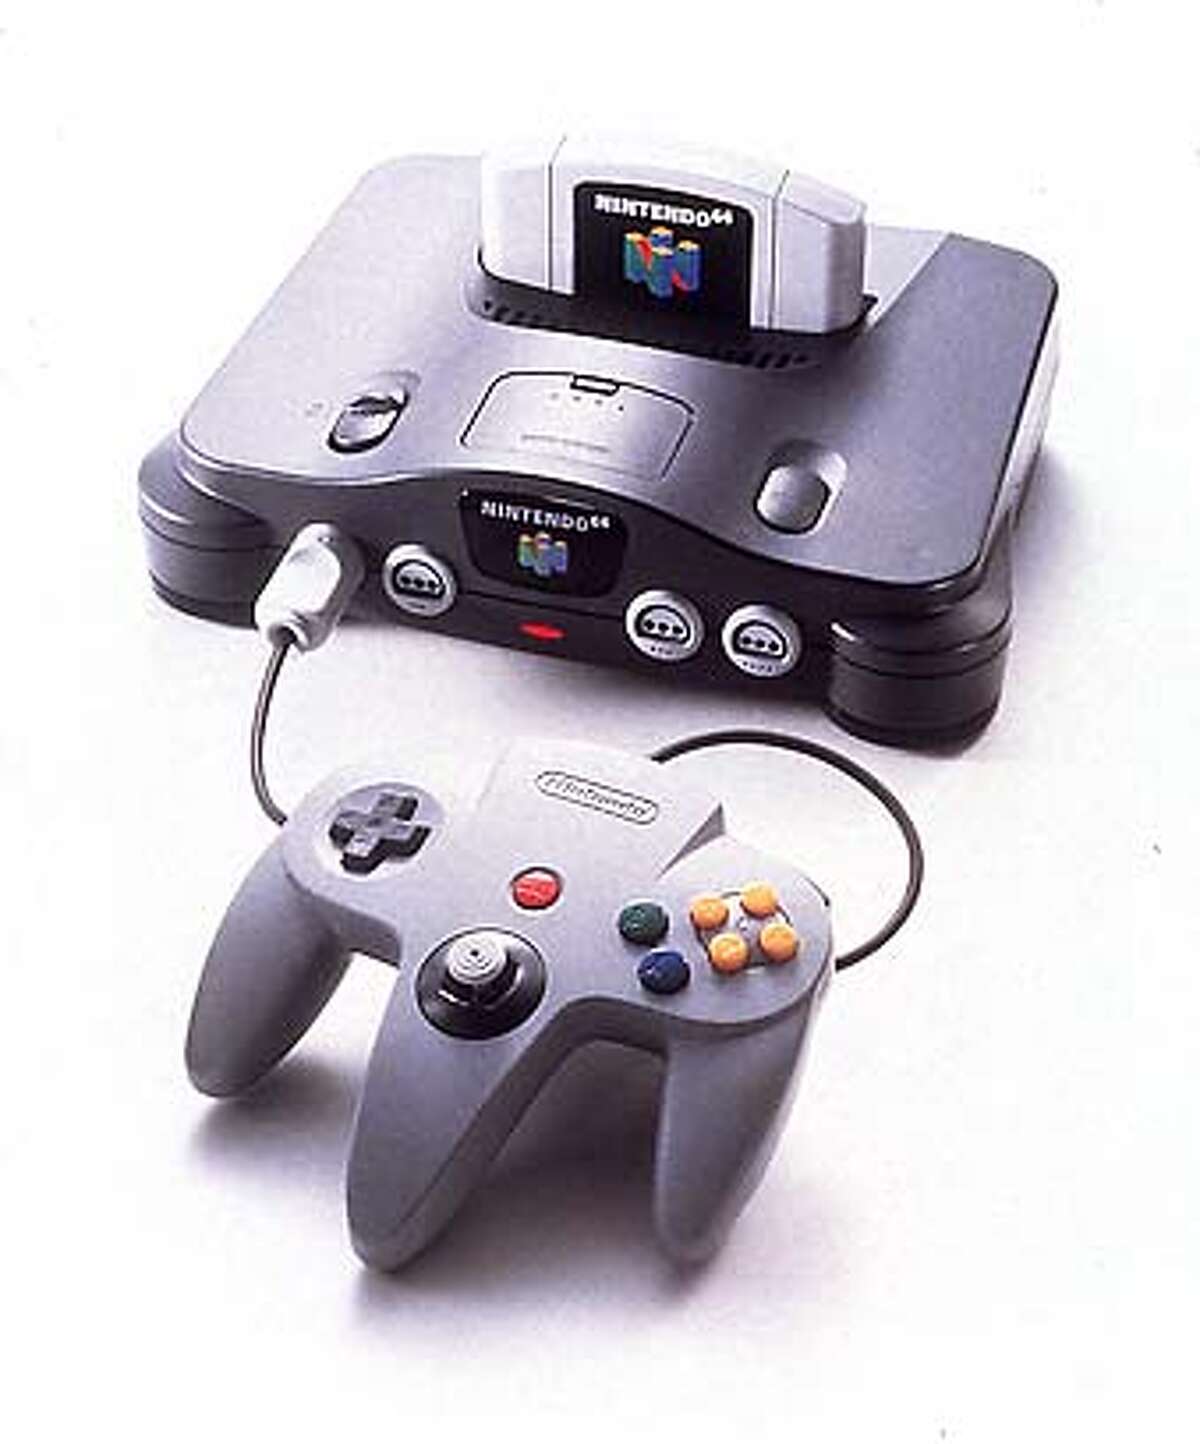 64 бита купить. Приставка Нинтендо 64 бит. Nintendo 64 Dreamcast. Джойстик супер Нинтендо 16 бит. Приставка Sega Dreamcast.